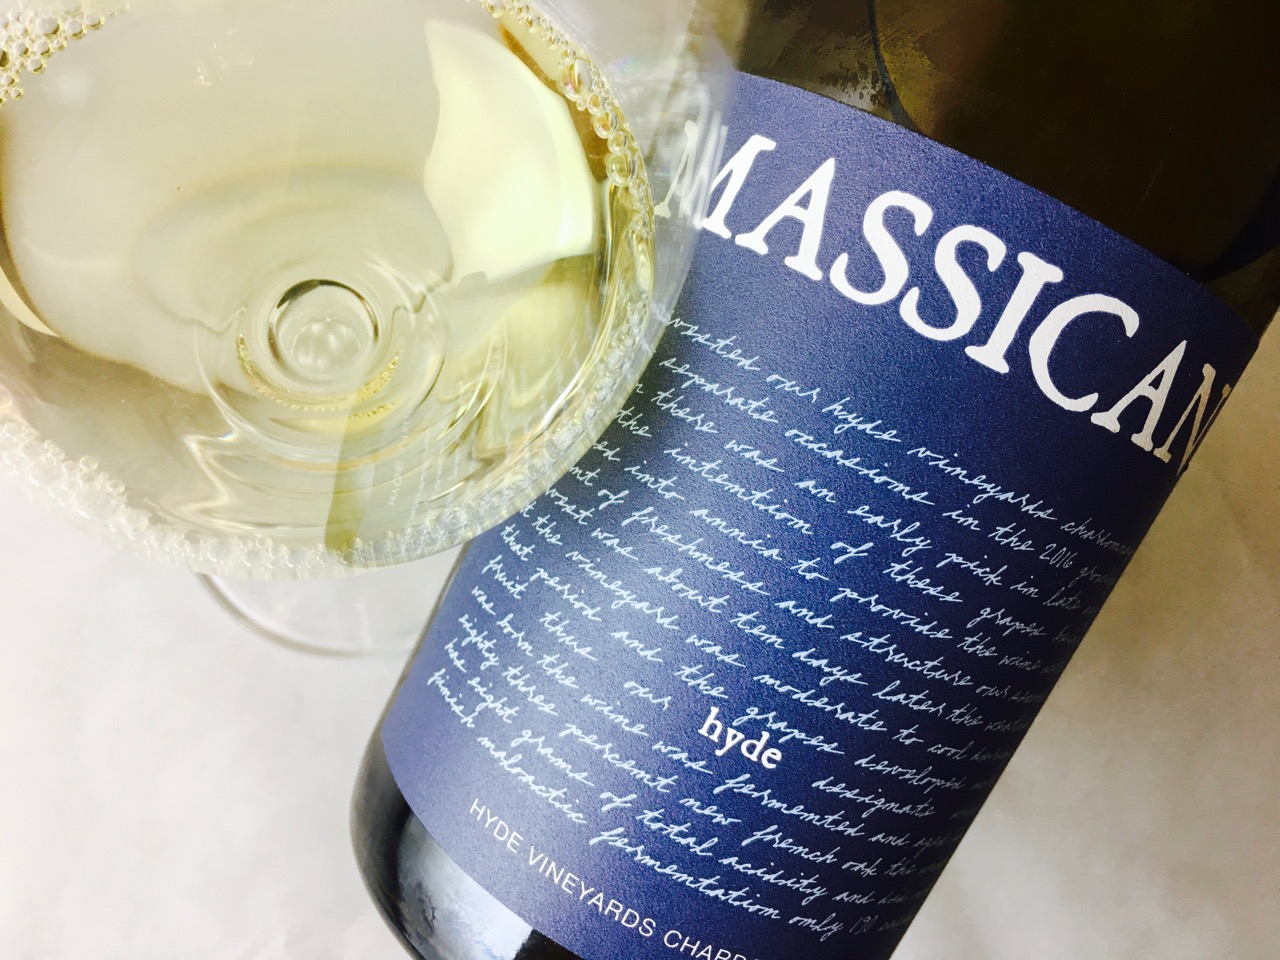 2016 Massican Chardonnay Hyde Napa Valley